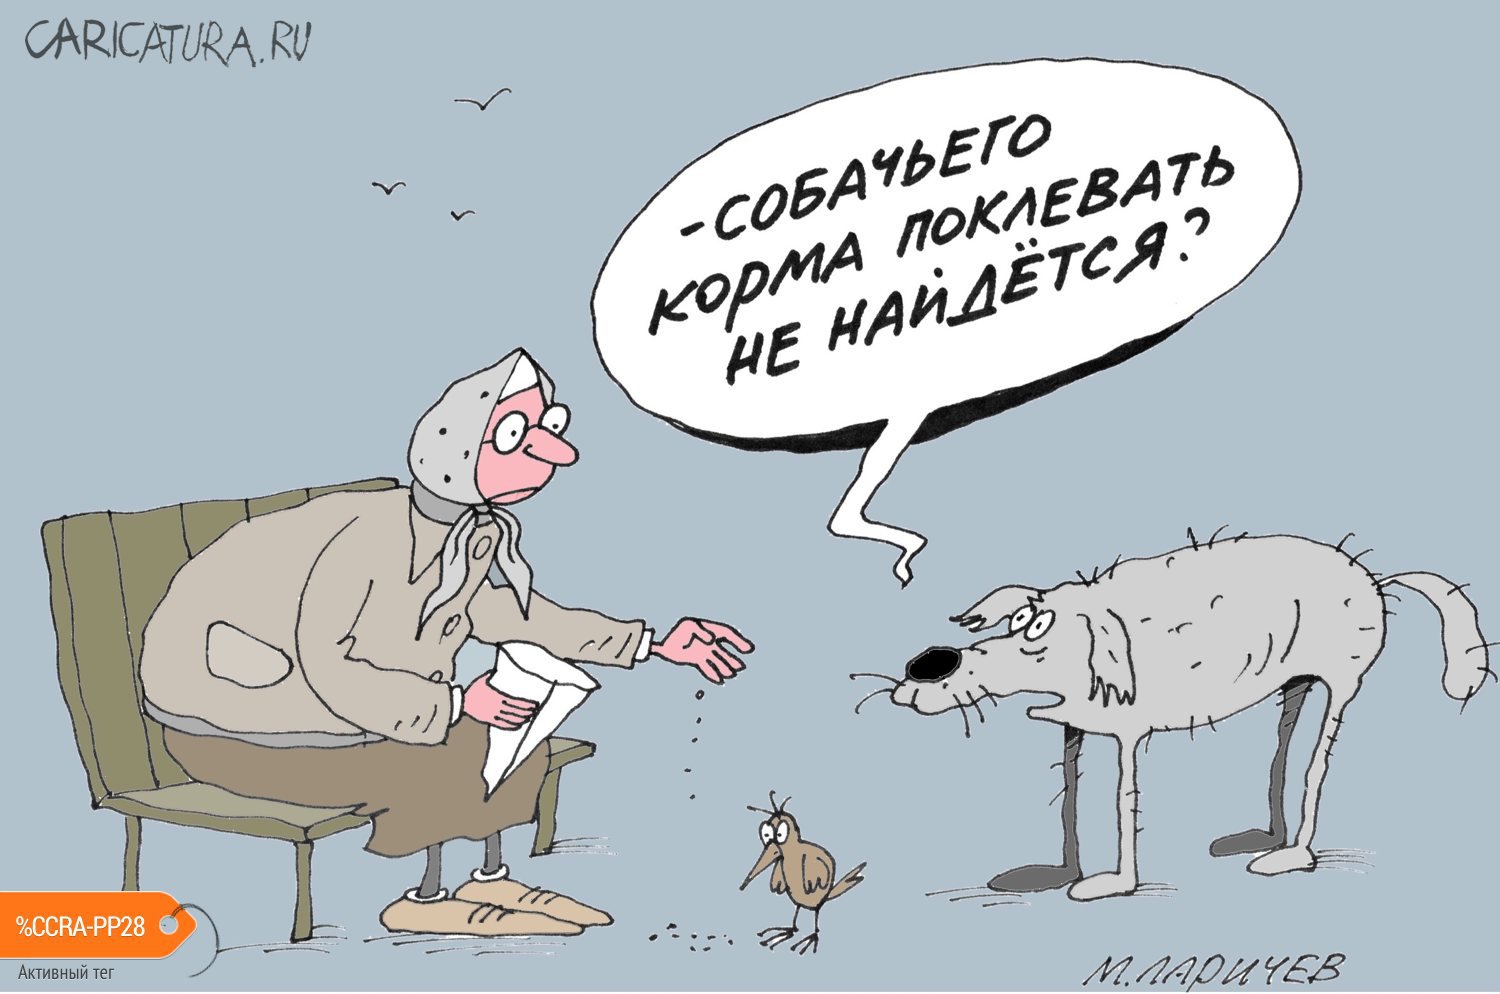 Карикатура "Собачий корм", Михаил Ларичев